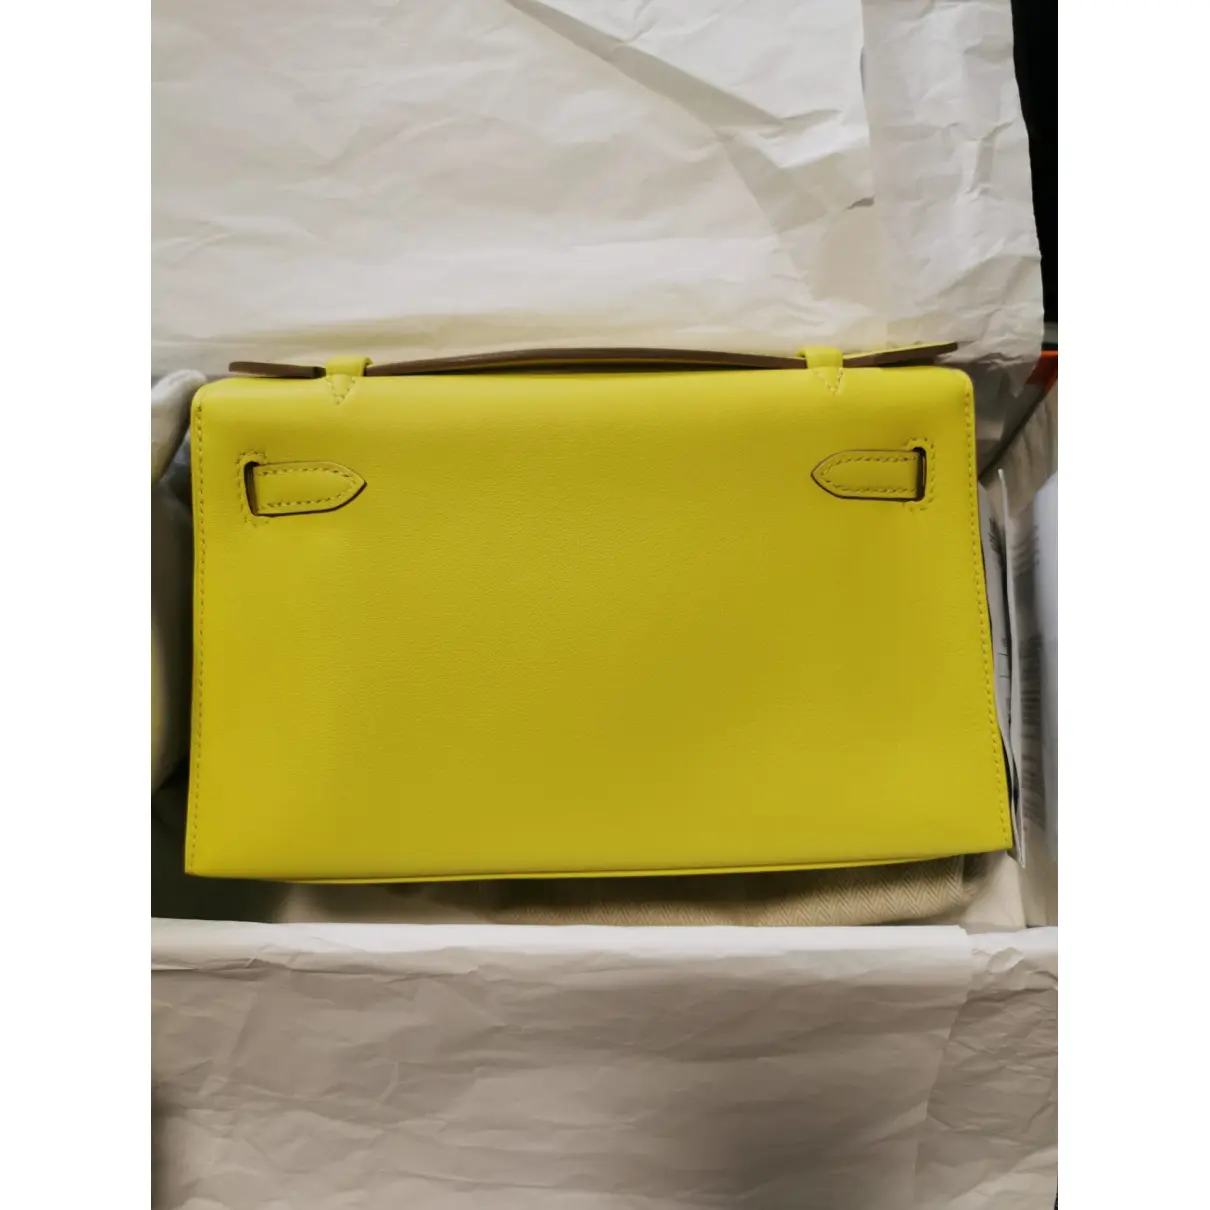 Buy Hermès Kelly Clutch leather clutch bag online